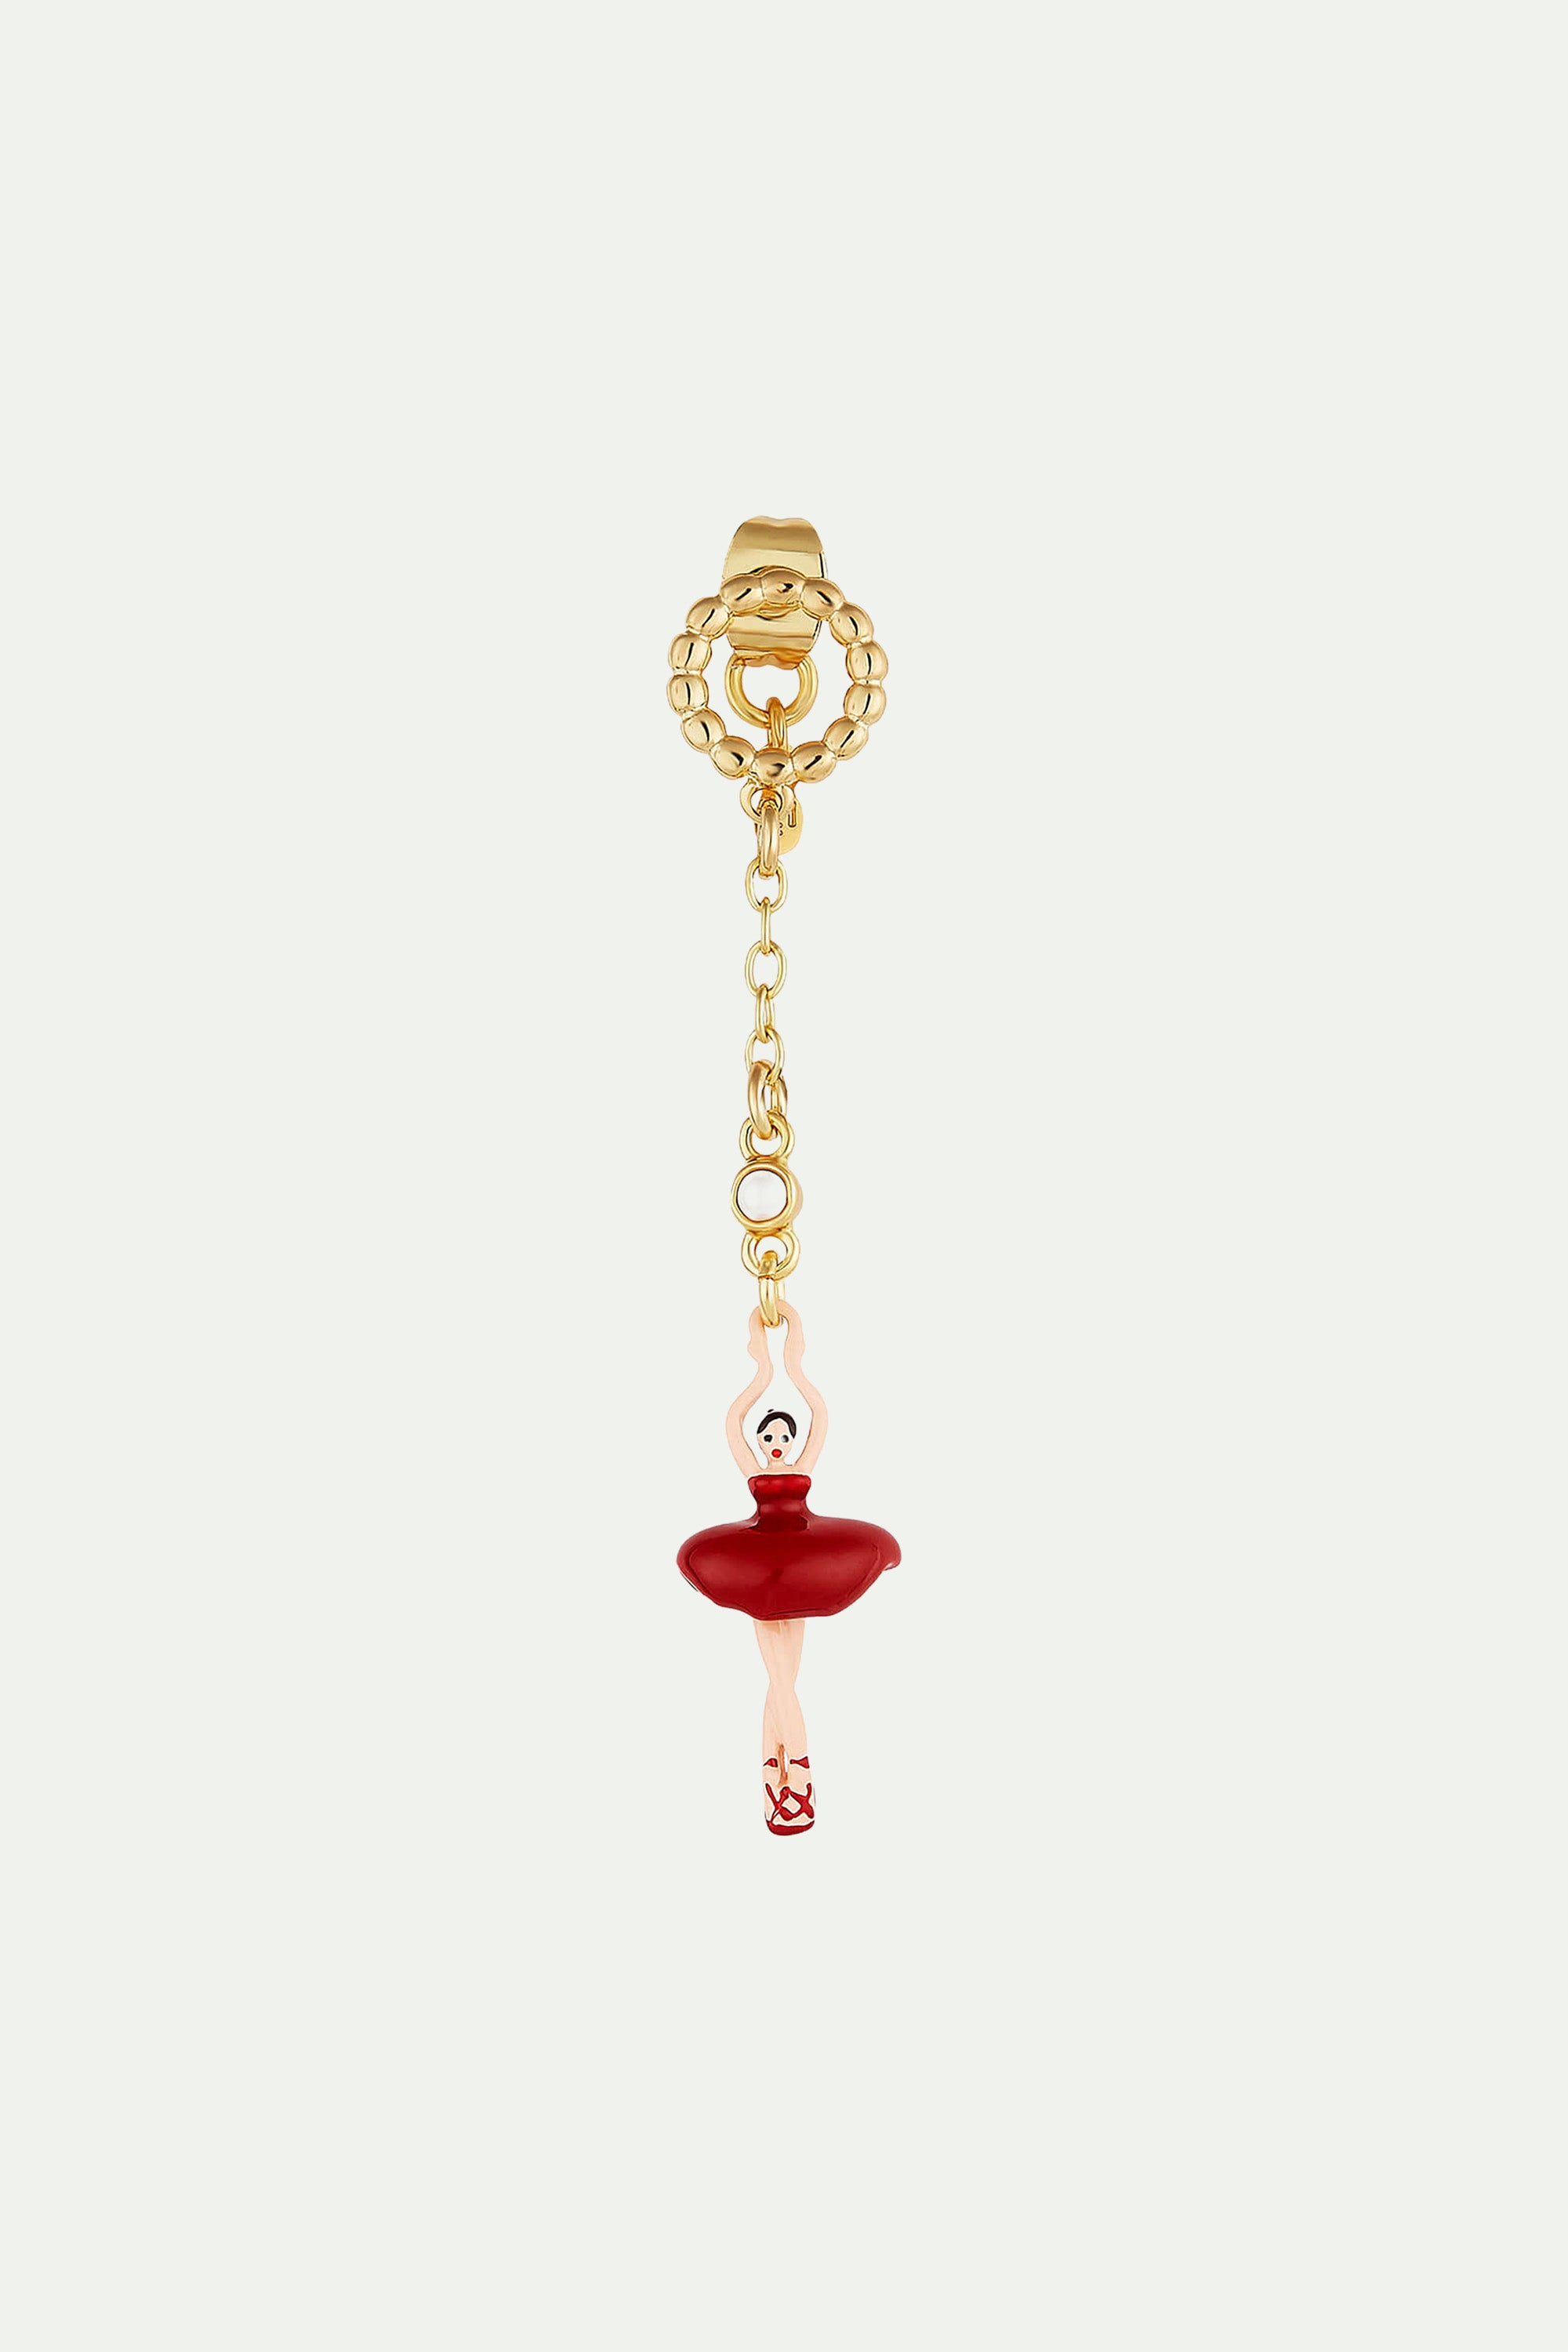 Beaded ring and red tutu ballerina post earrings